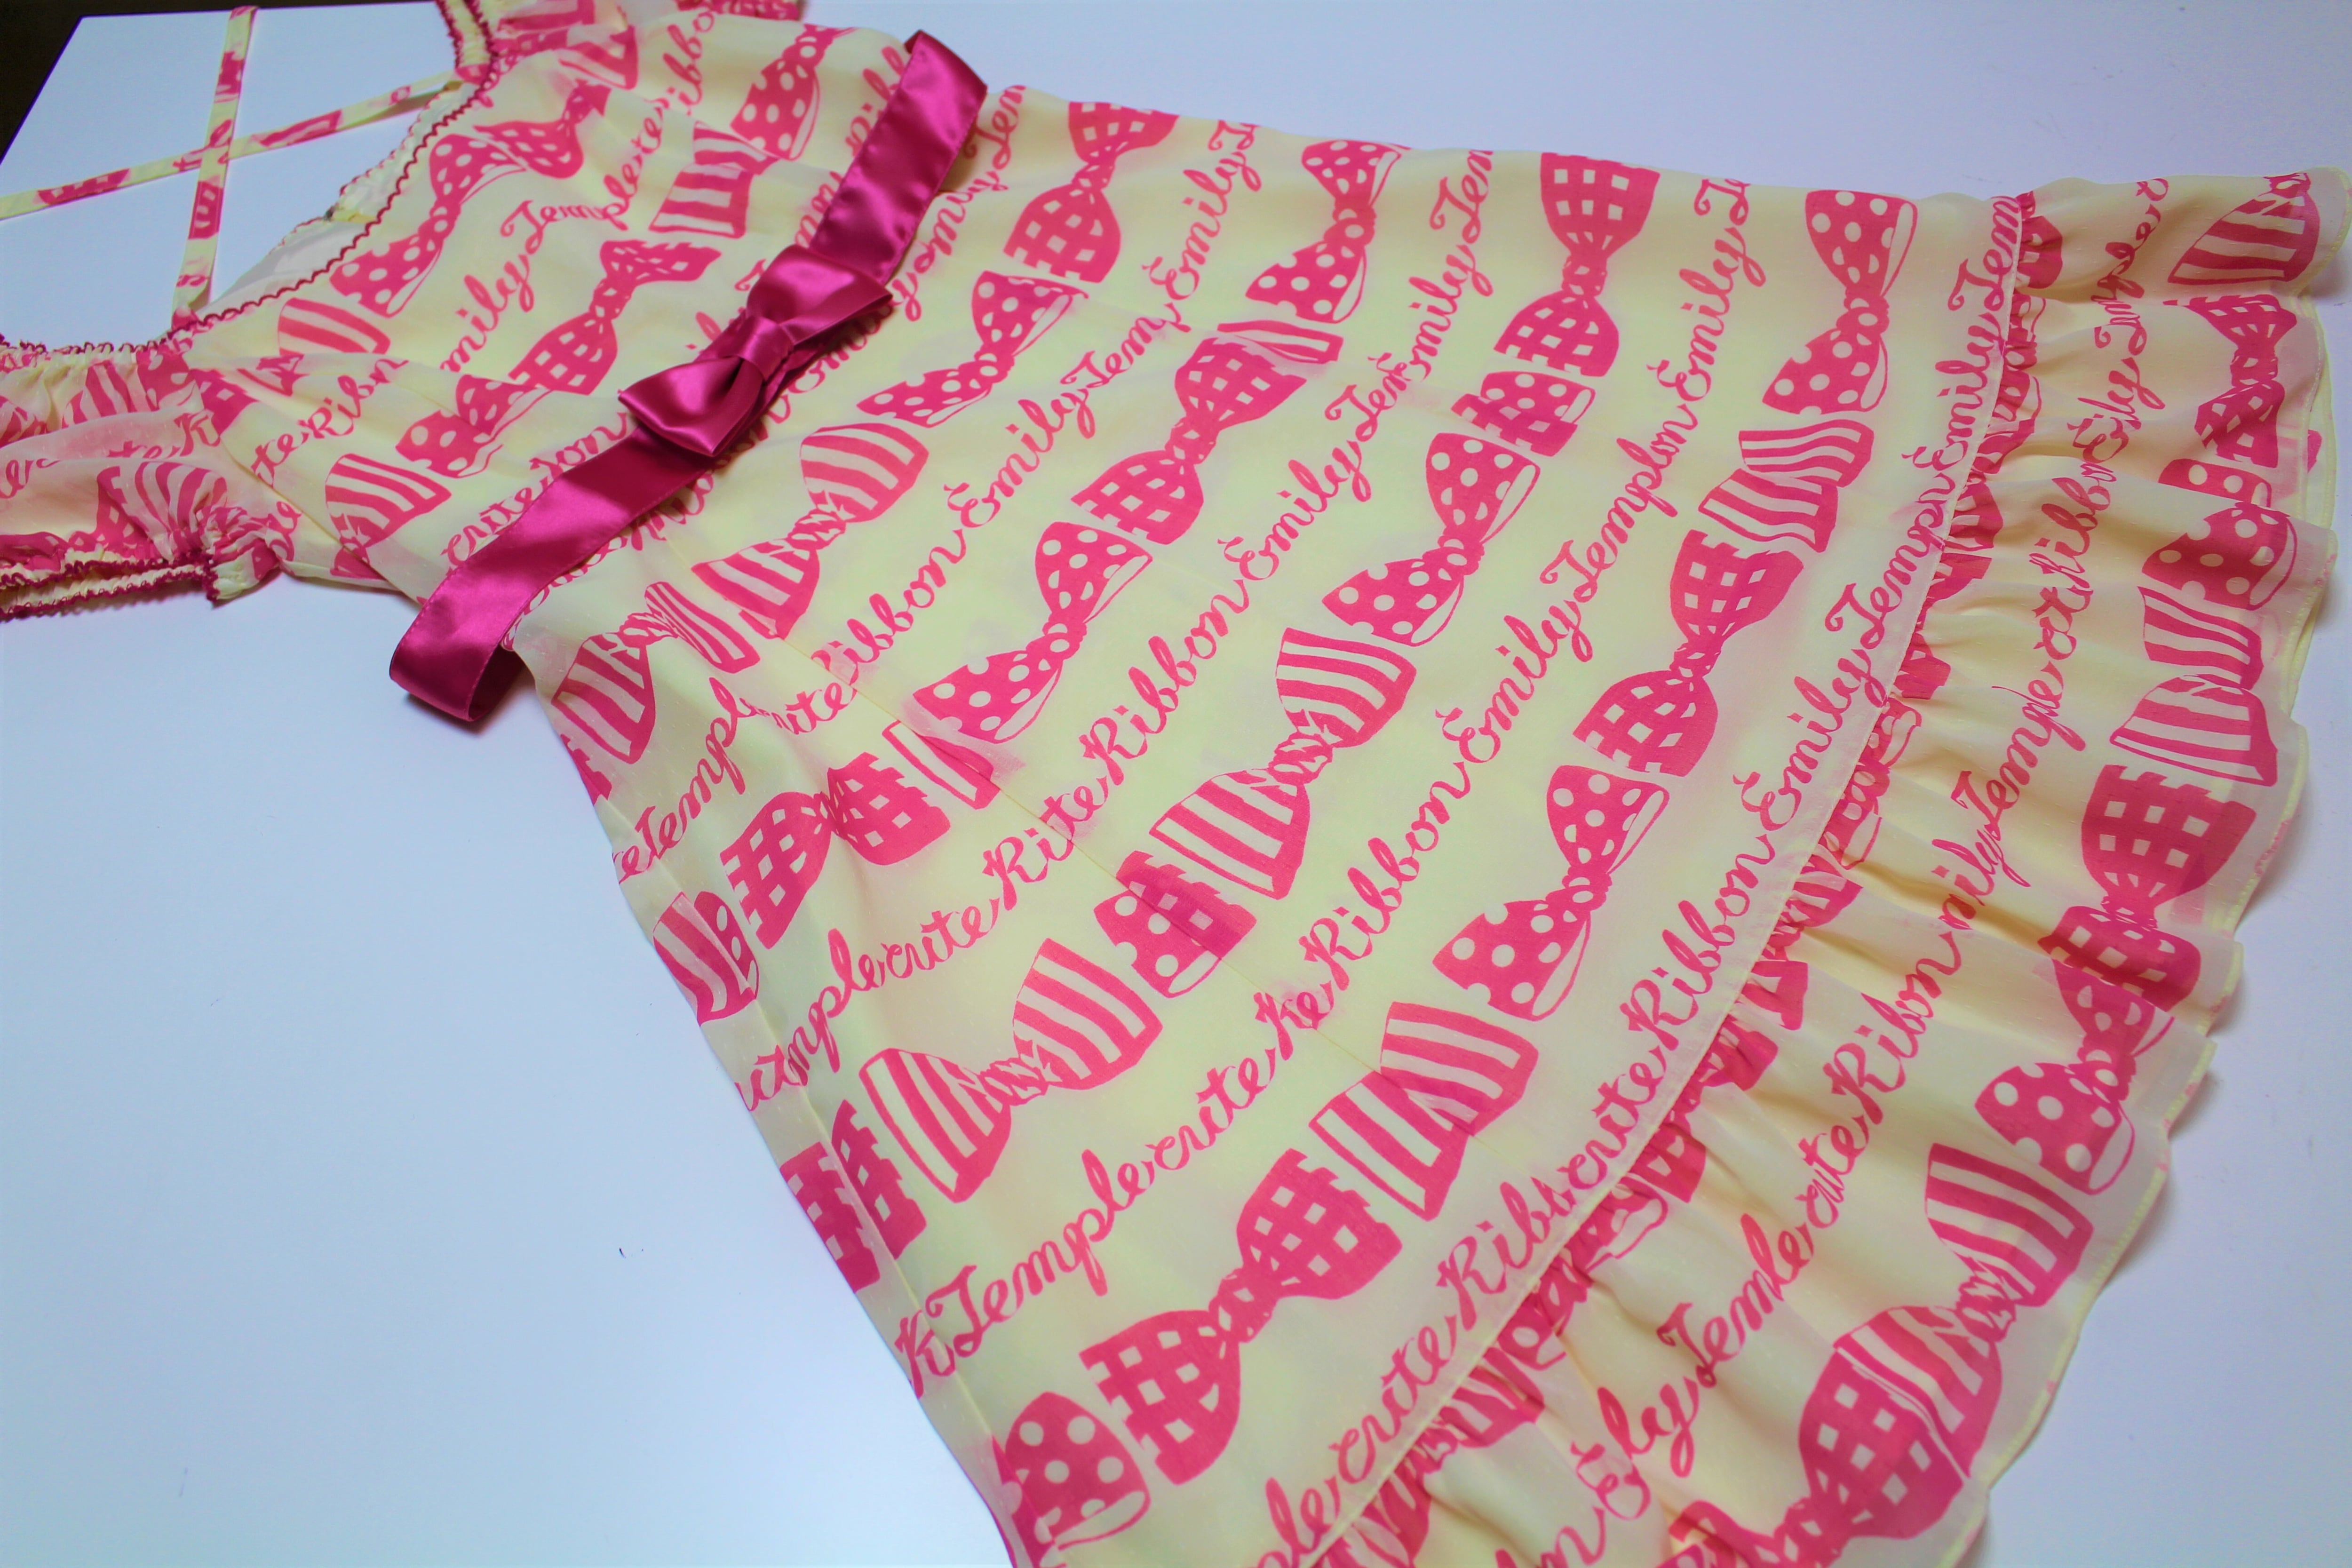 Emily Temple Cute　エミリーテンプルキュート　ピンク　ワンピースひざ丈スカート